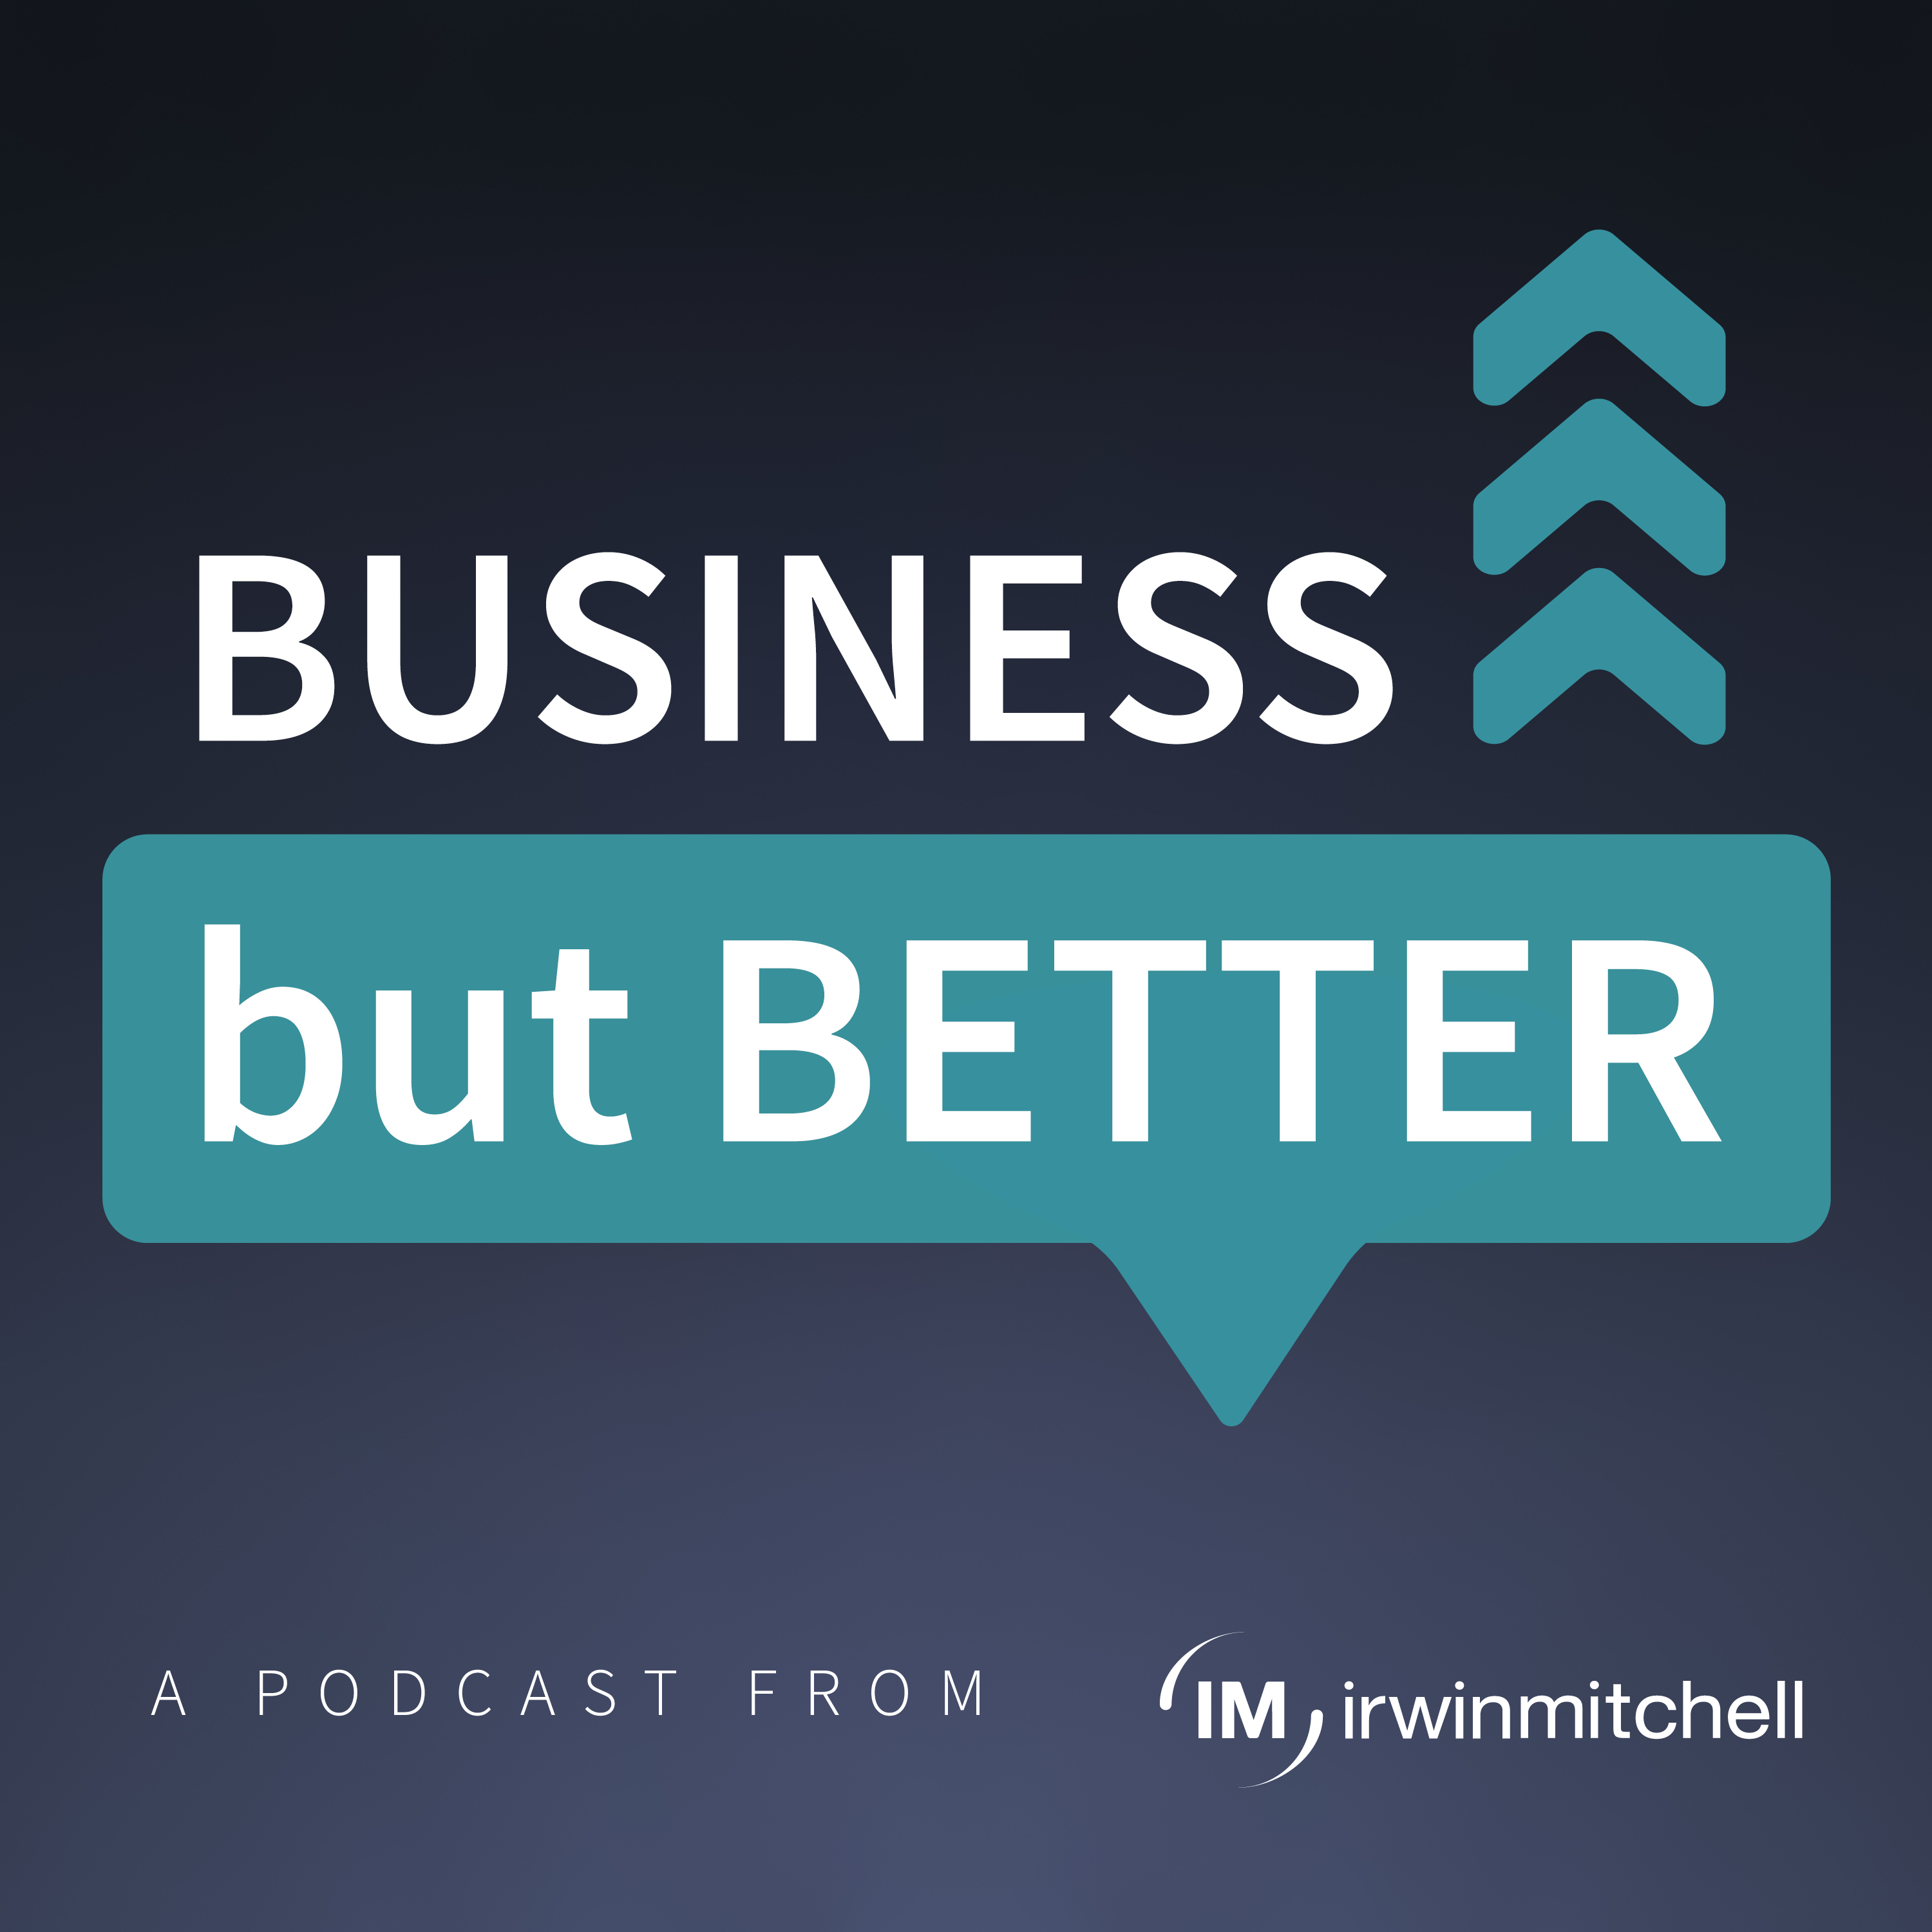 Business but better podcast logo